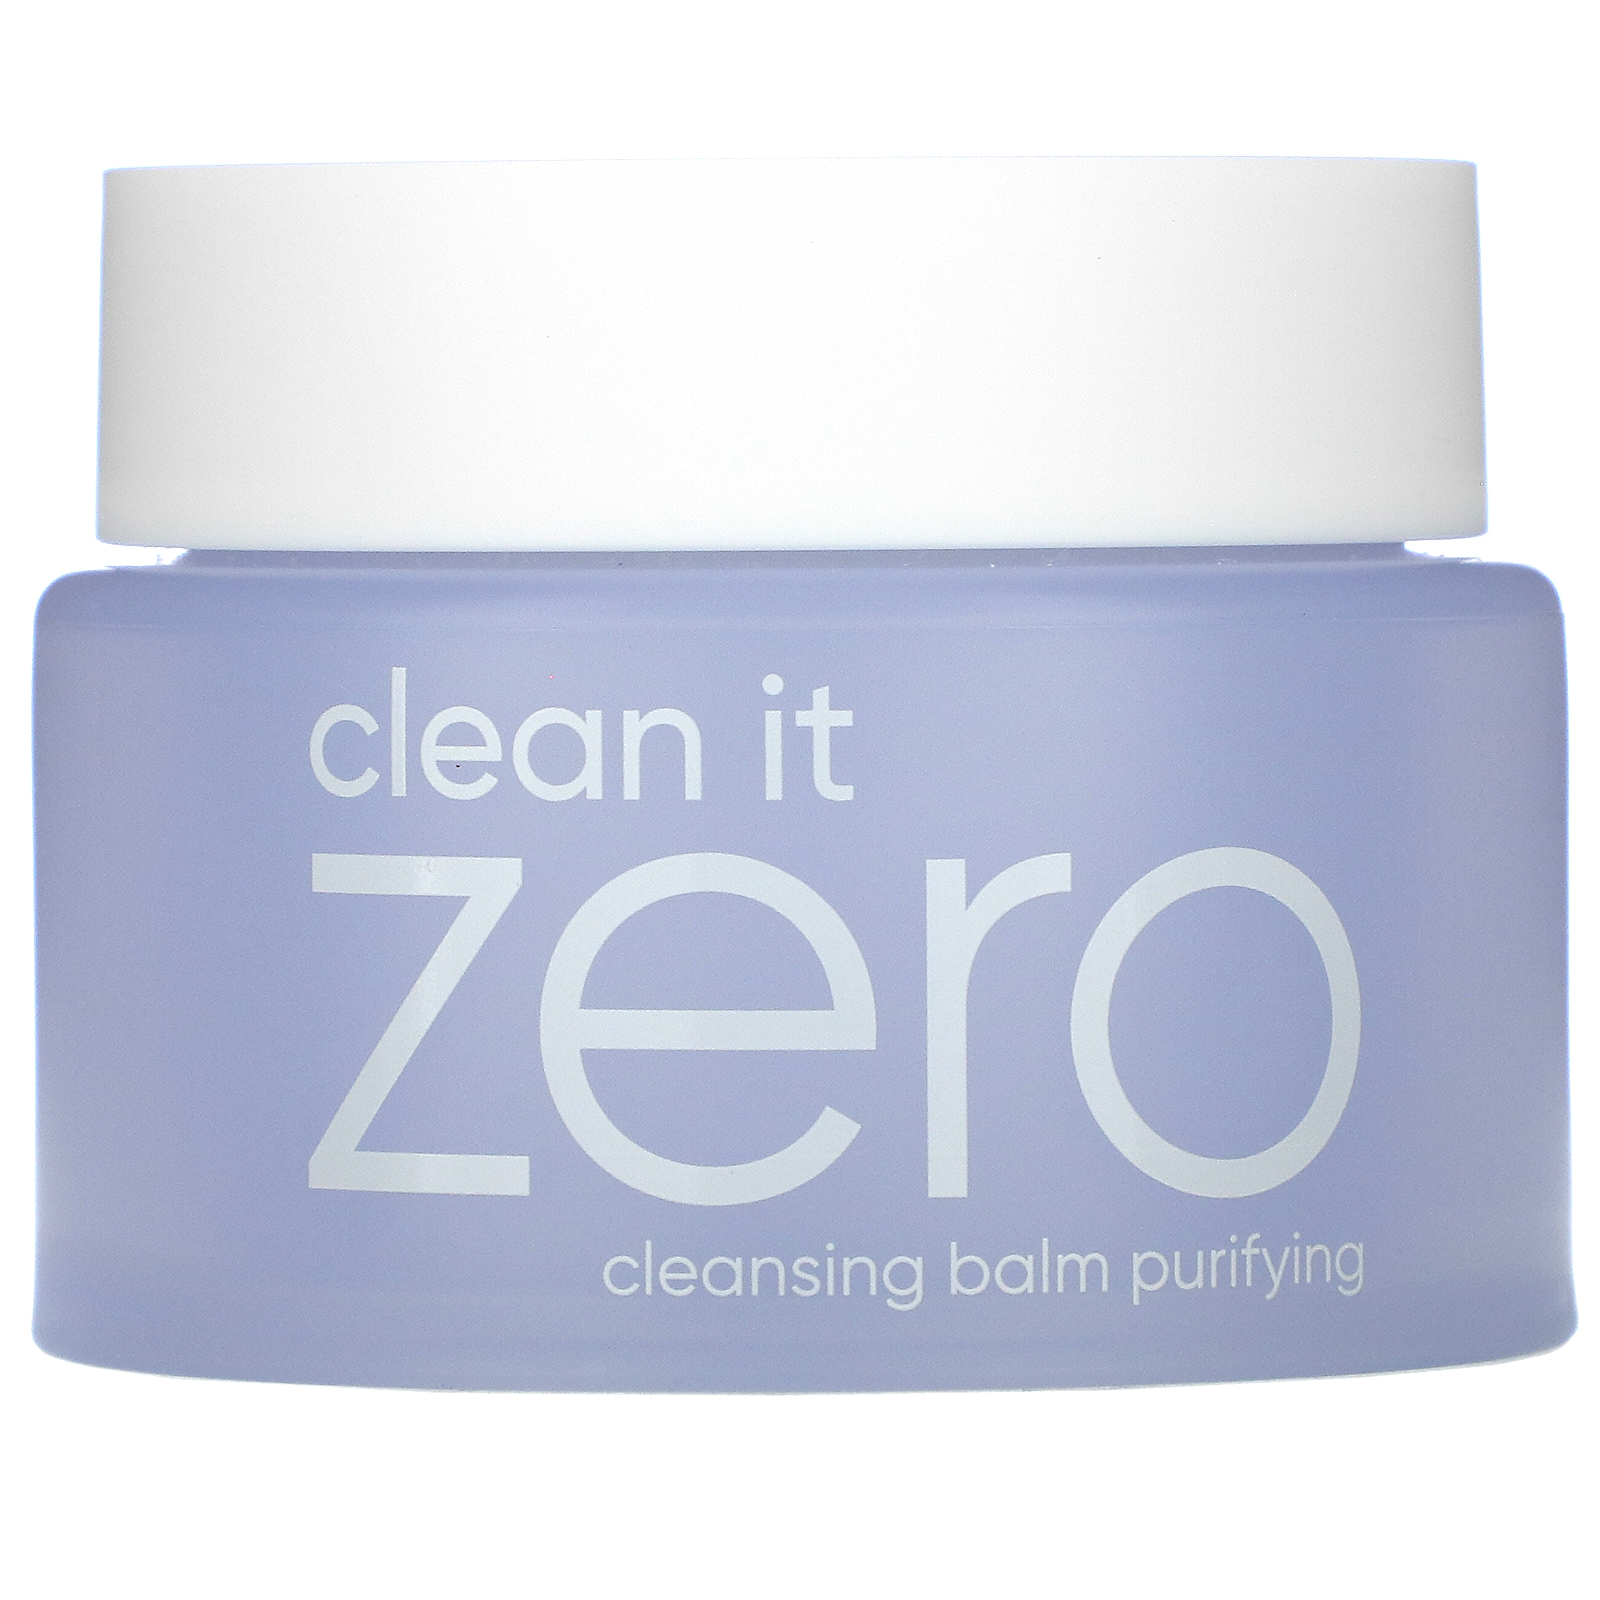 Clean it zero cleansing balm